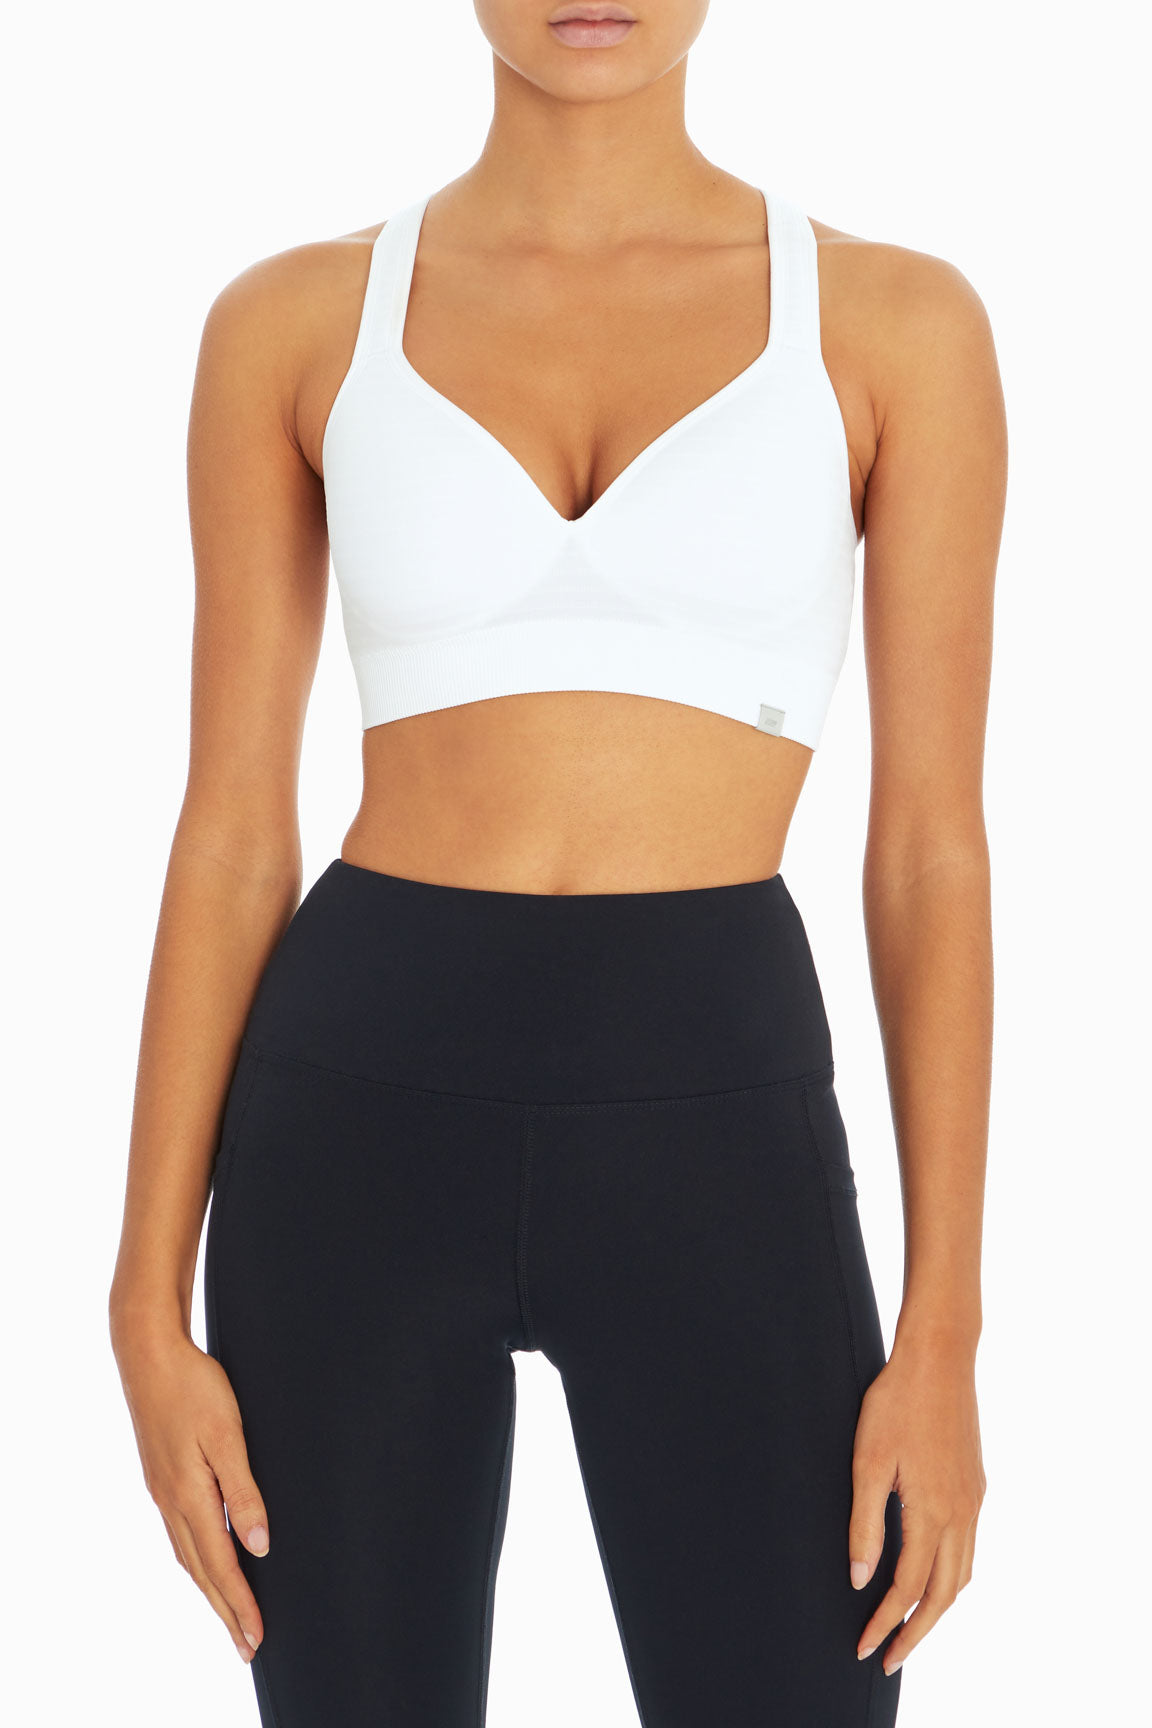 MARIKA Seamless Zip Front Bra - Sports bra Women's, Buy online